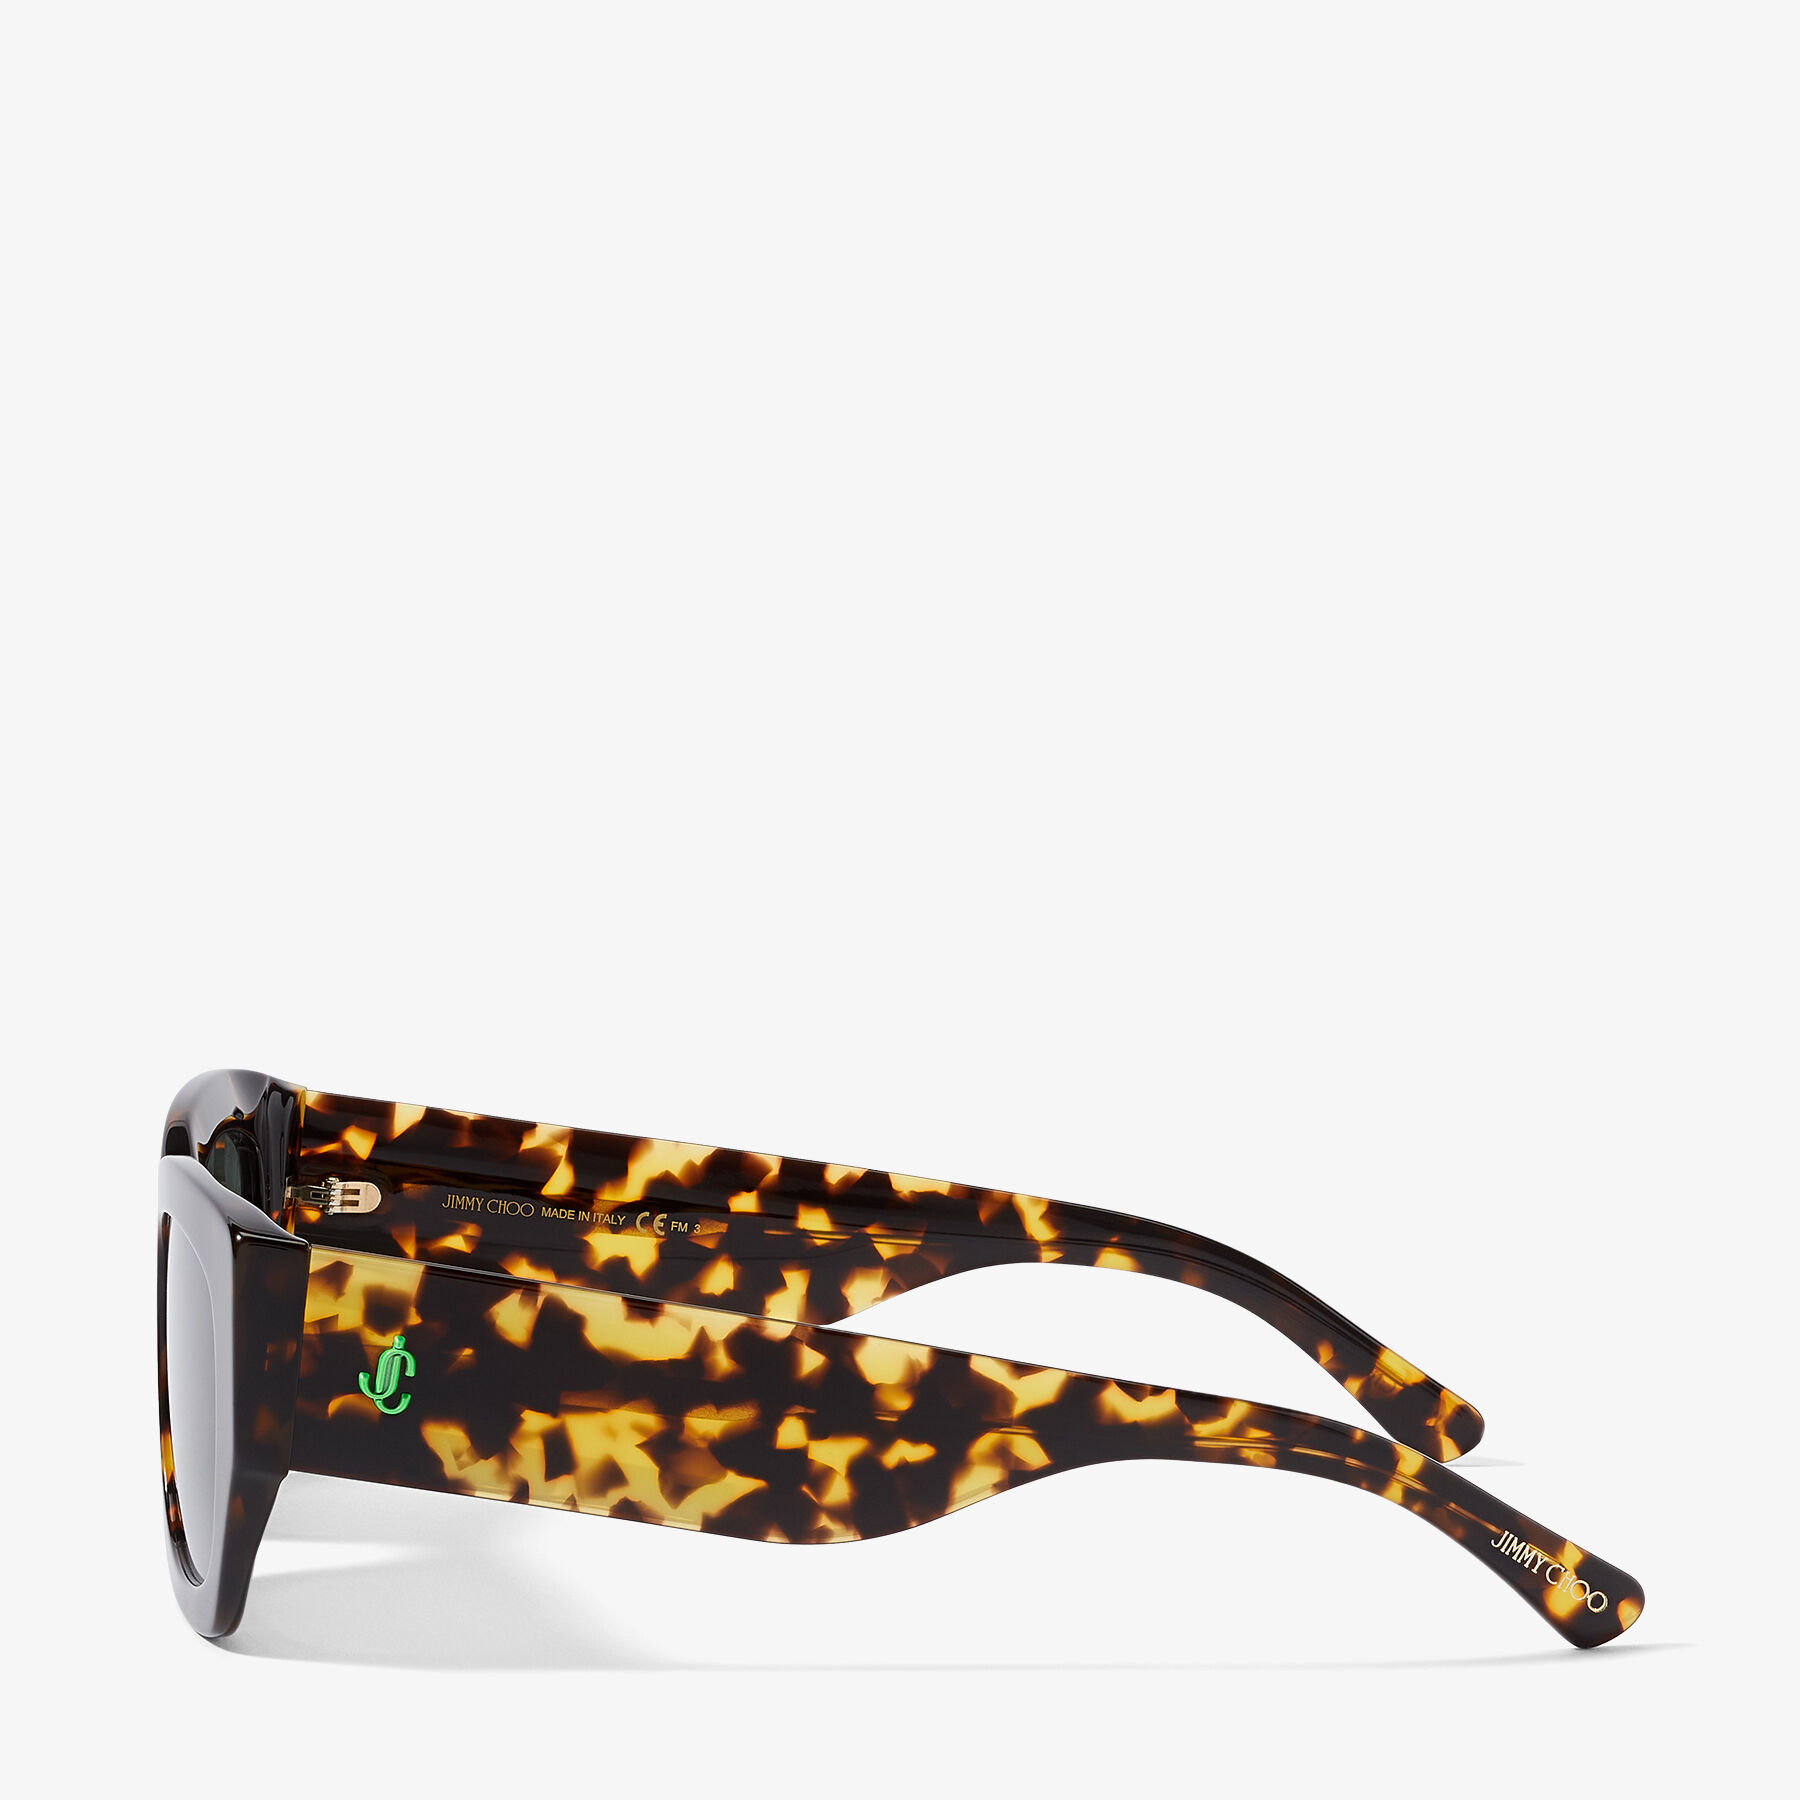 Multicolor Women Sunglasses, Square Style, 100% UVA UVB Protection, Jimmy  Choo, Sunglasses